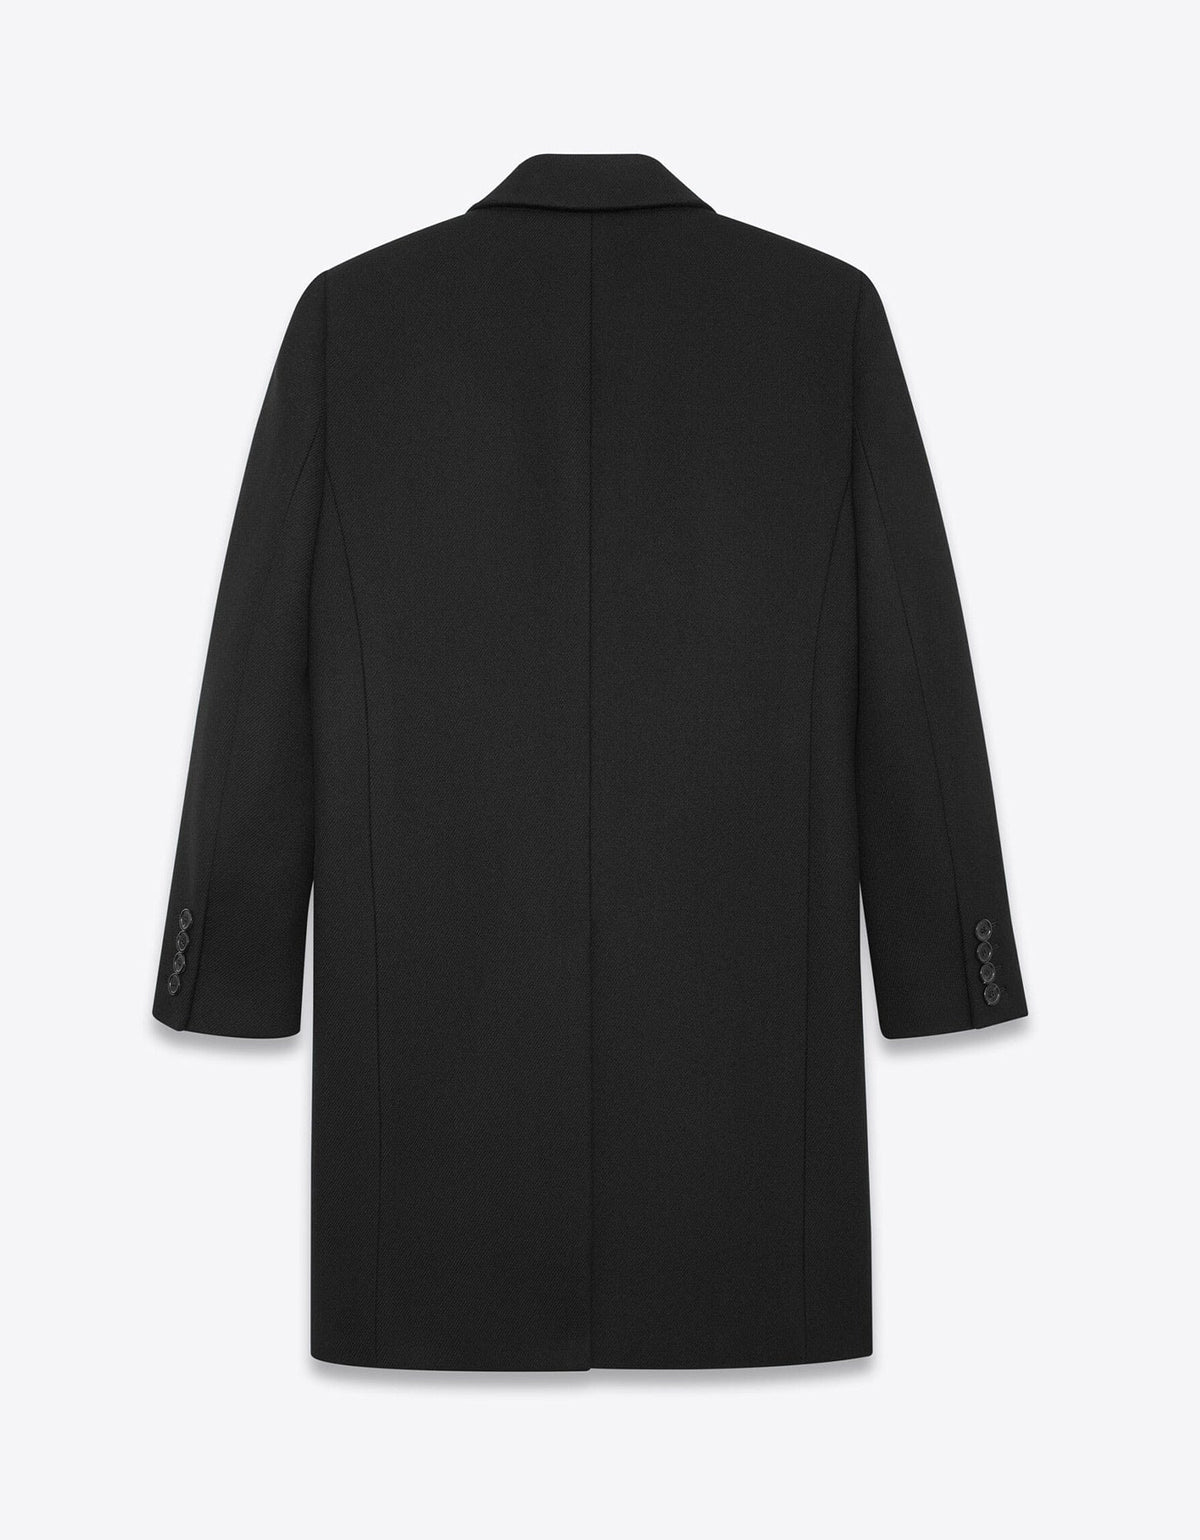 Saint Laurent Black Double-Breasted Wool Coat